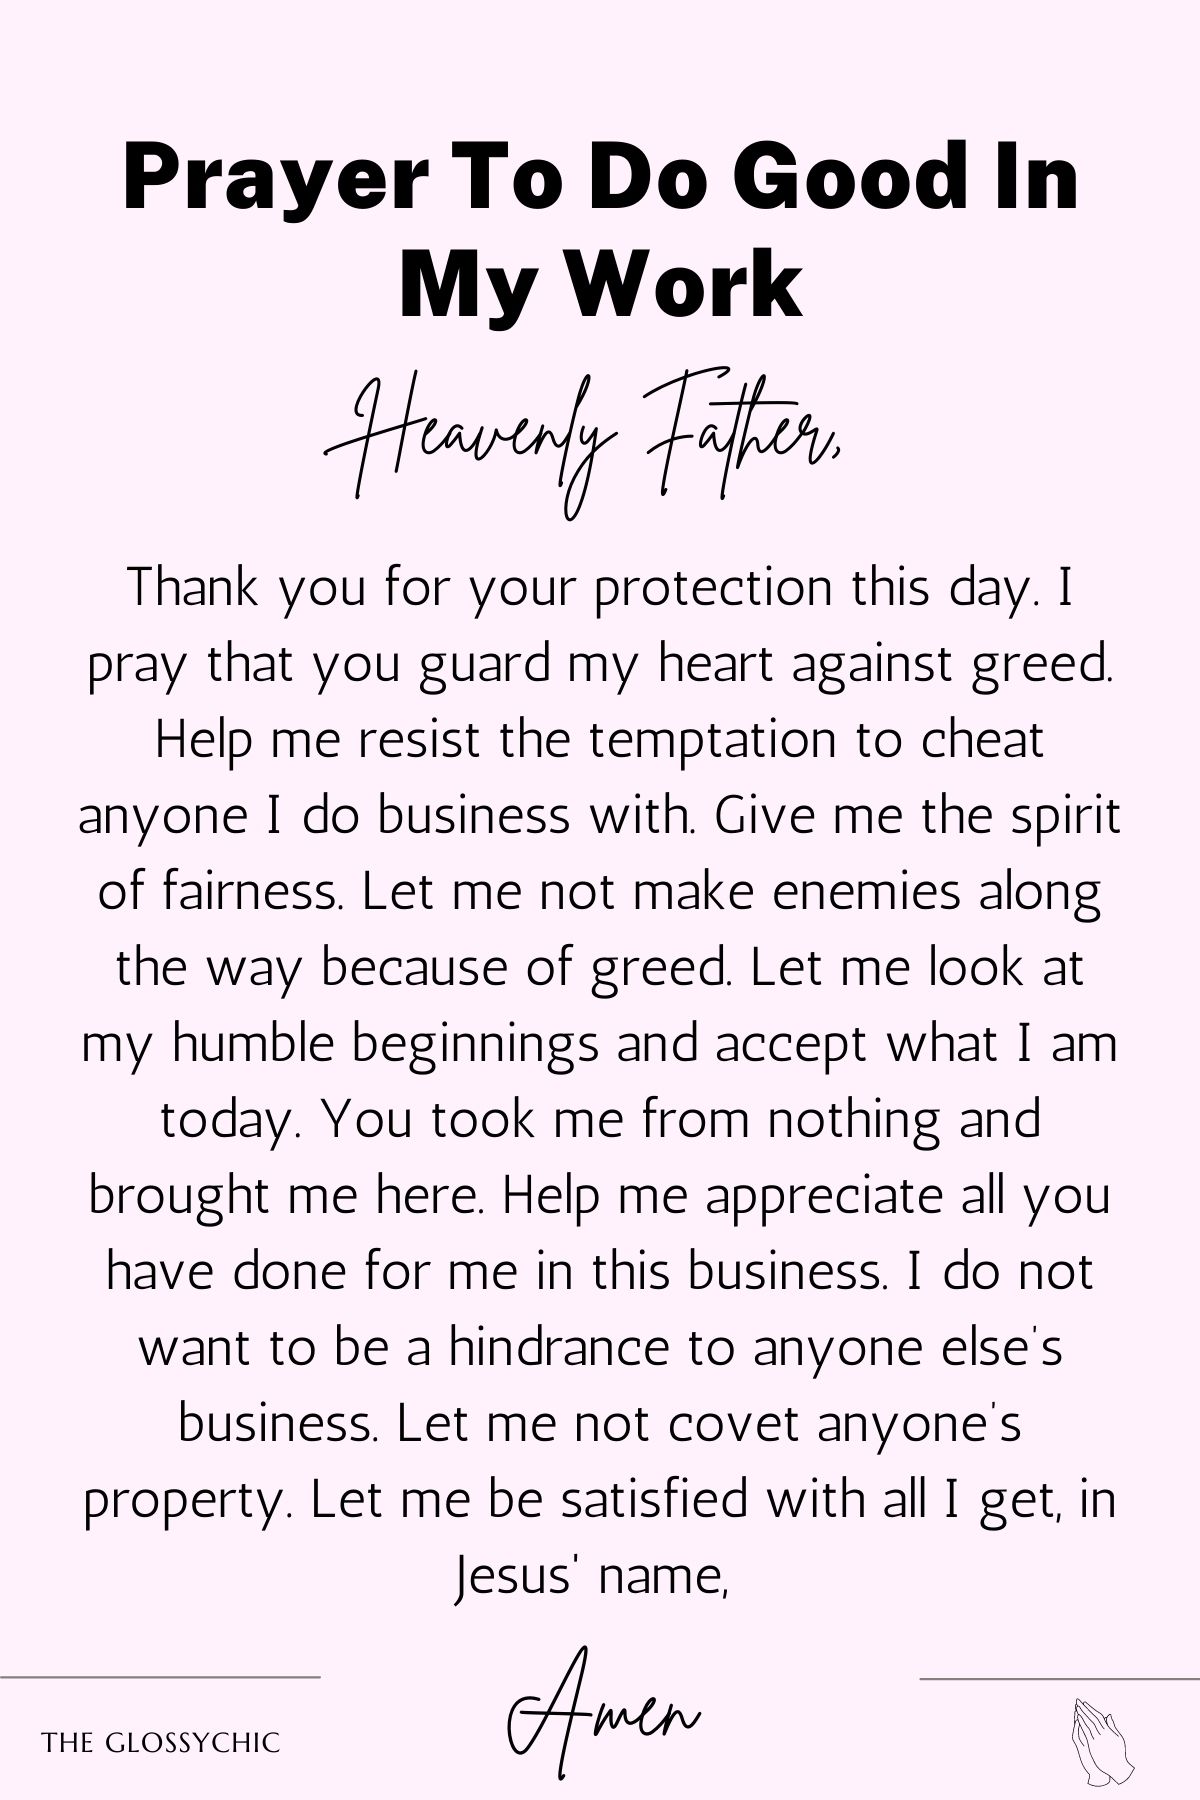 Prayer to do good in my work - business prayer points